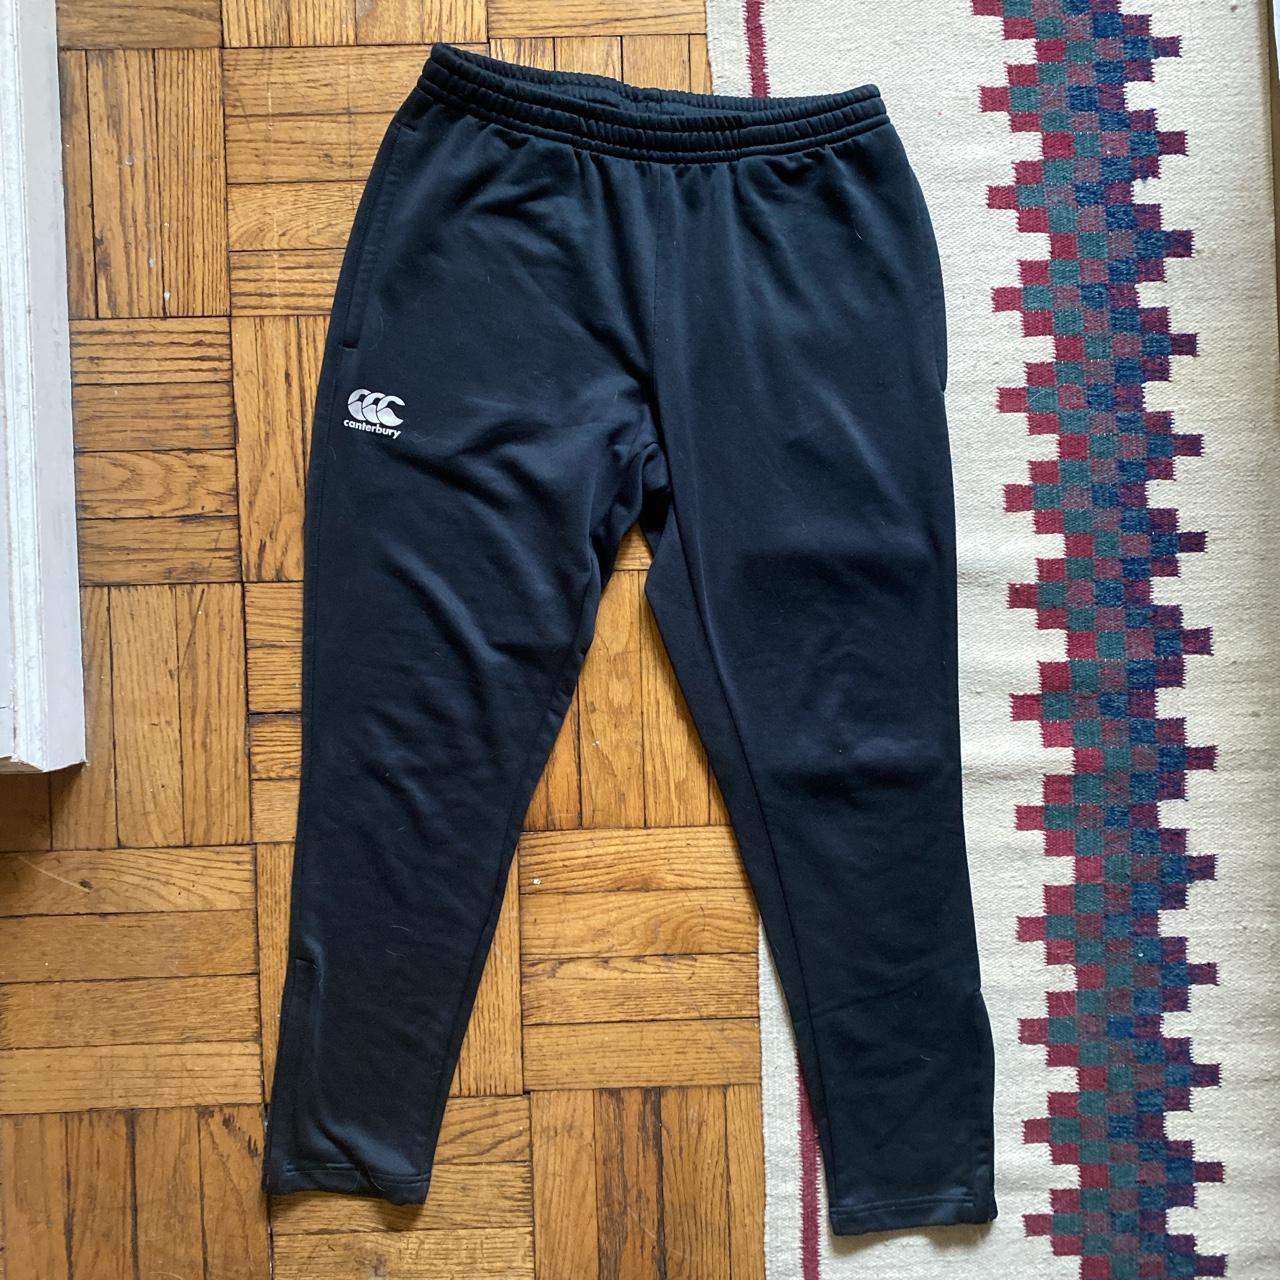 Product Image 1 - Canterbury track jogger pants size